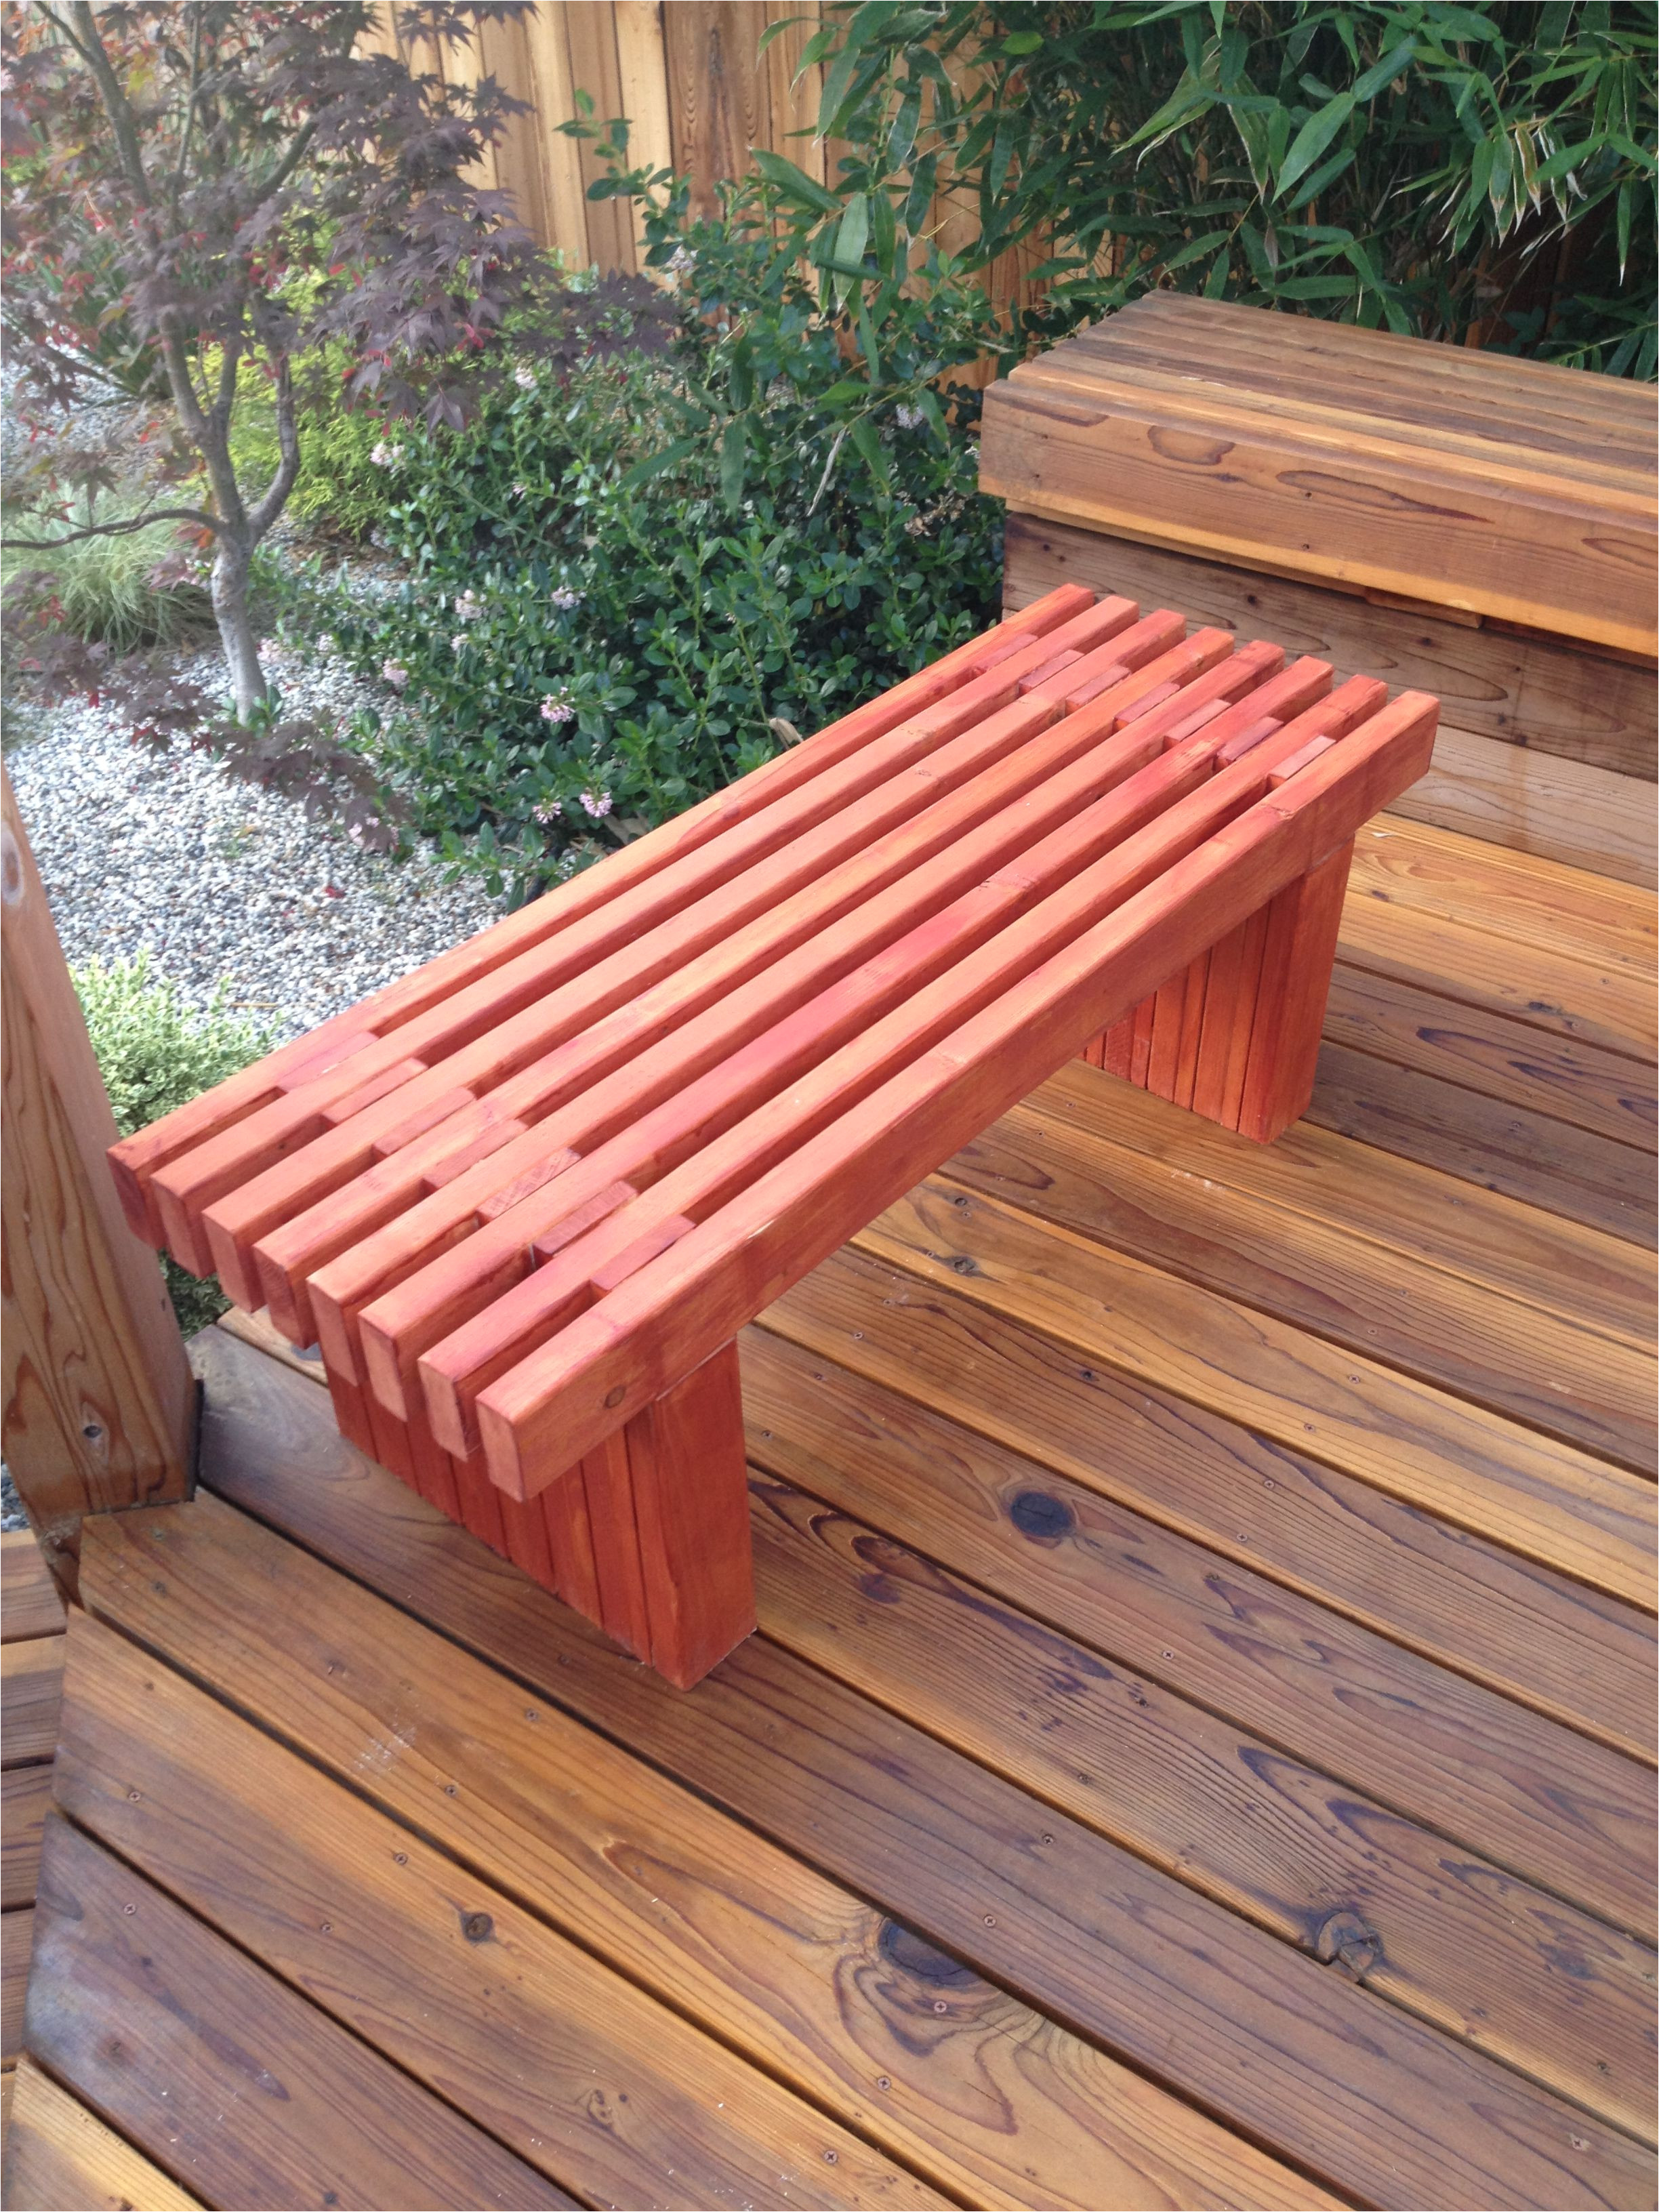 slat bench wood high chairs cedar bench wood planter box diy deck